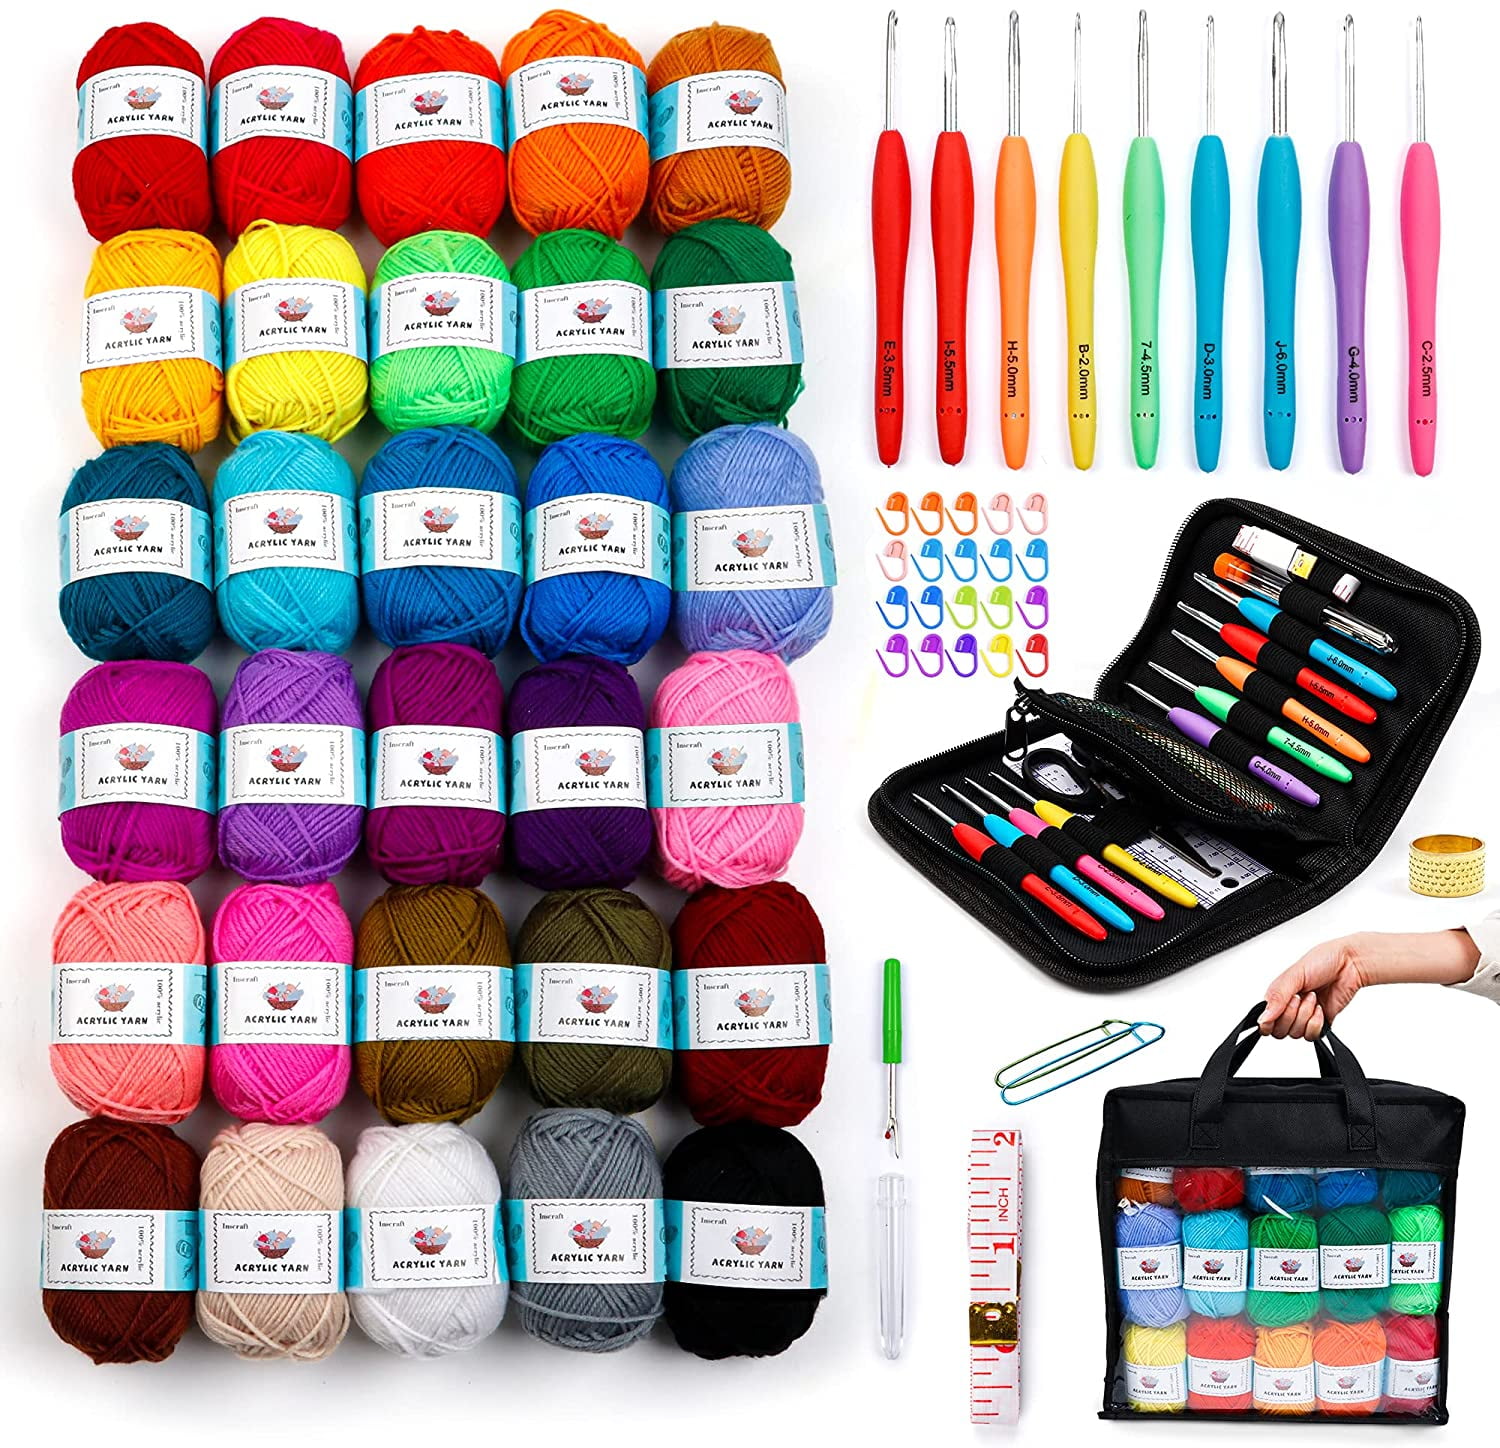 103 Pcs Crochet Kit with Crochet Hooks Yarn Set, Premium Bundle Includes 2180 Yards Acrylic Yarn Skeins Balls, Needles, Accessories, Bag, Ideal